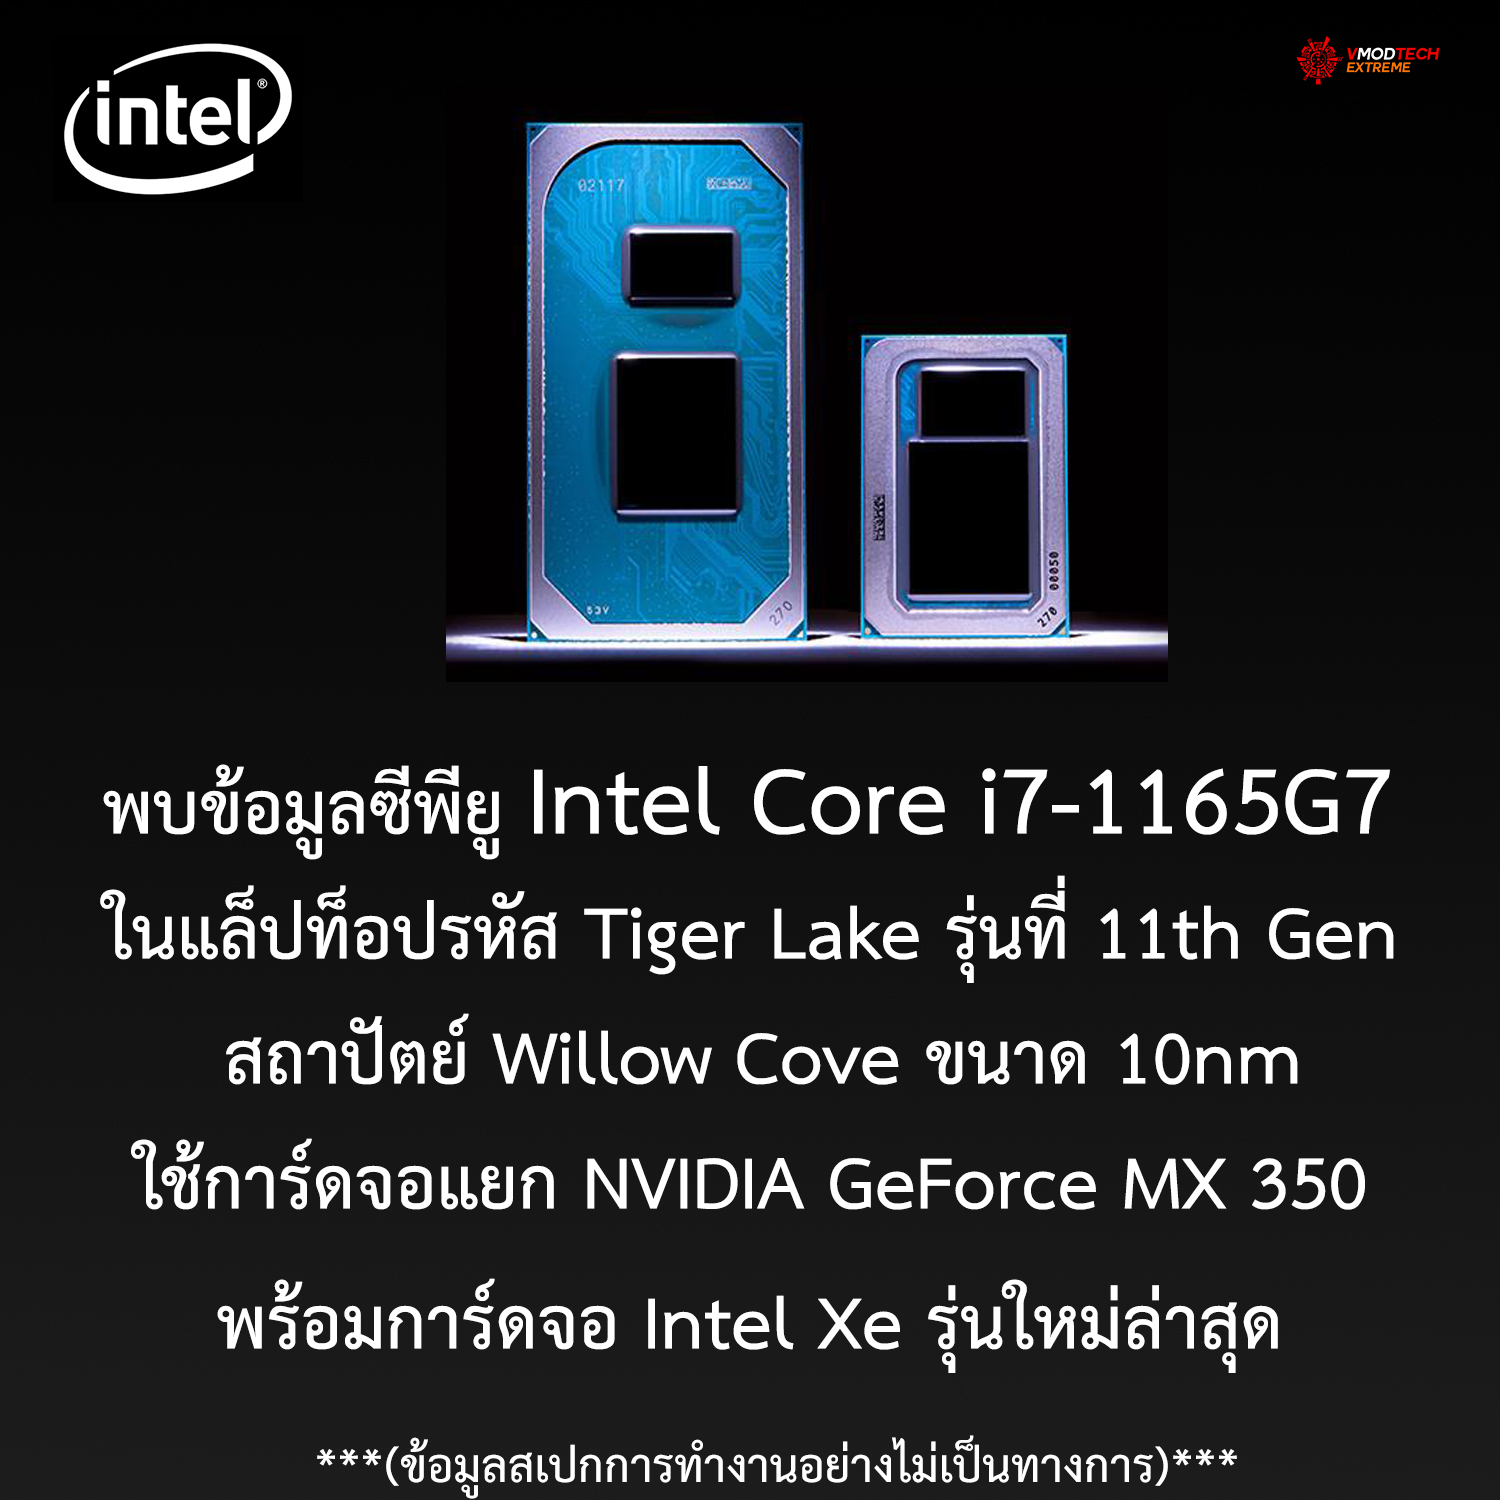 intel tiger lake intel xe mx 350 พบข้อมูลซีพียู Intel Core i7 1165G7 ในรหัส Tiger Lake รุ่นที่ 11th Gen สถาปัตย์ Willow Cove ขนาด 10nm พร้อมการ์ดจอ Intel Xe รุ่นใหม่ล่าสุด 